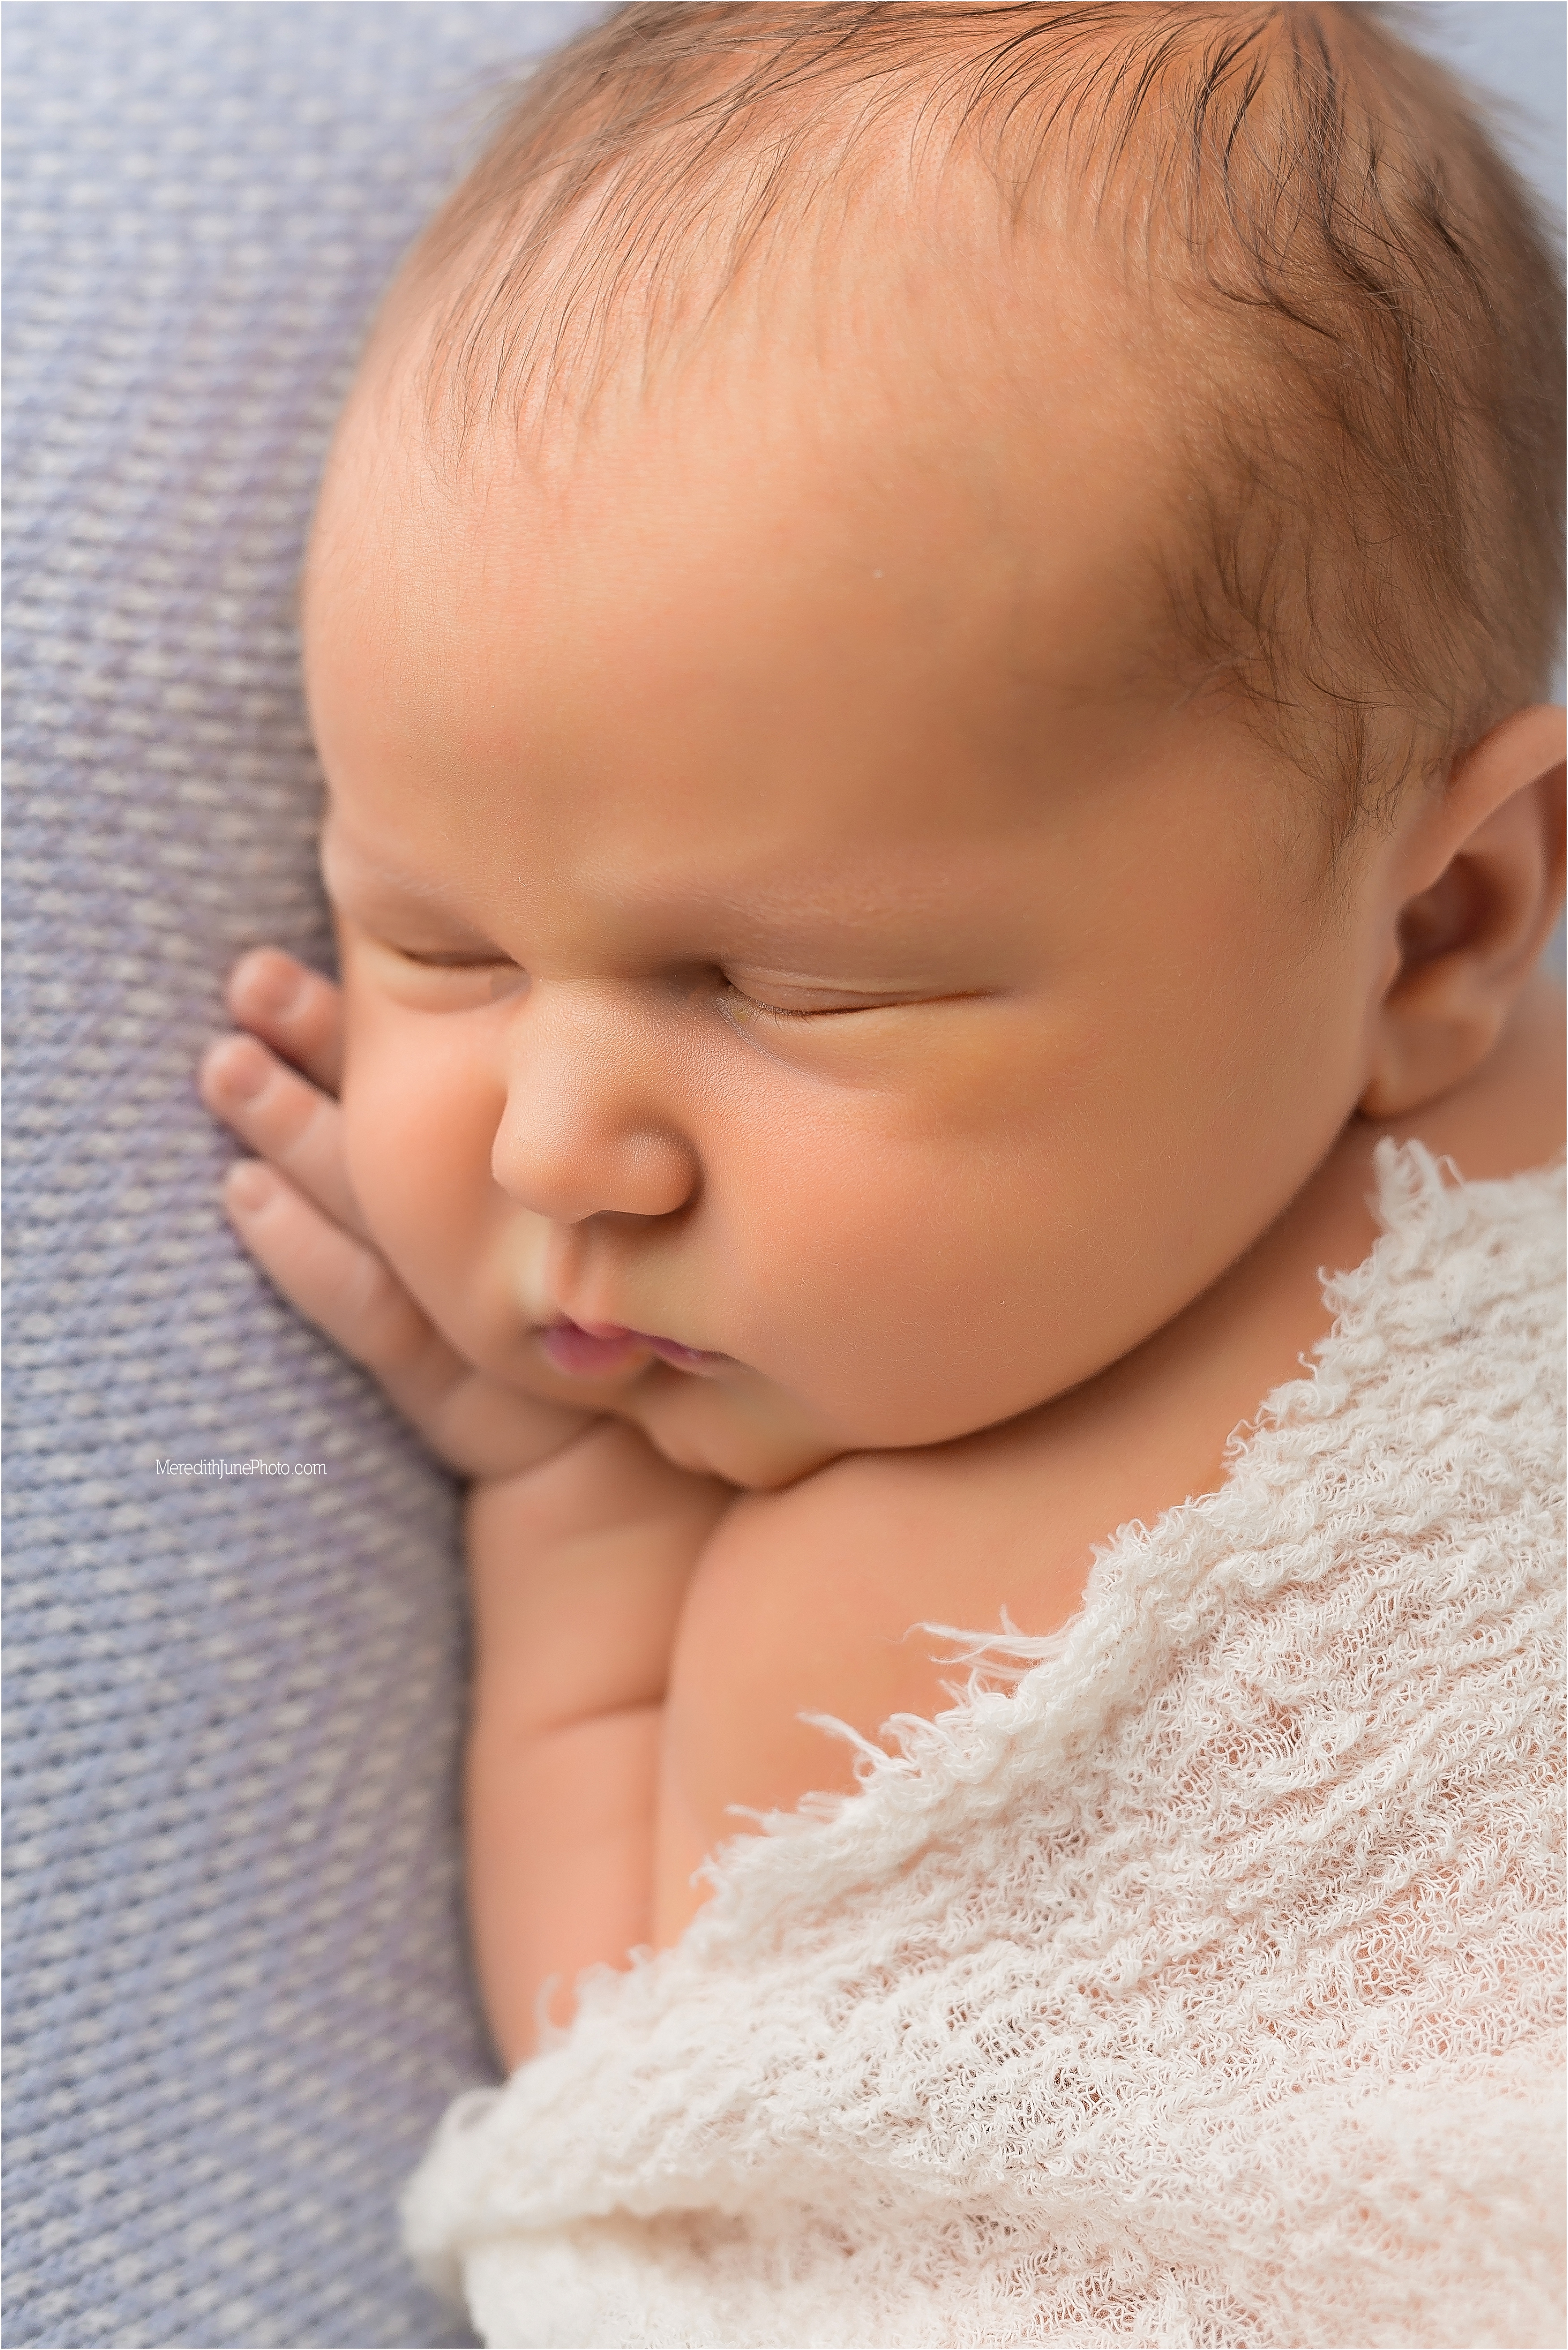 Baby Max during newborn photo session